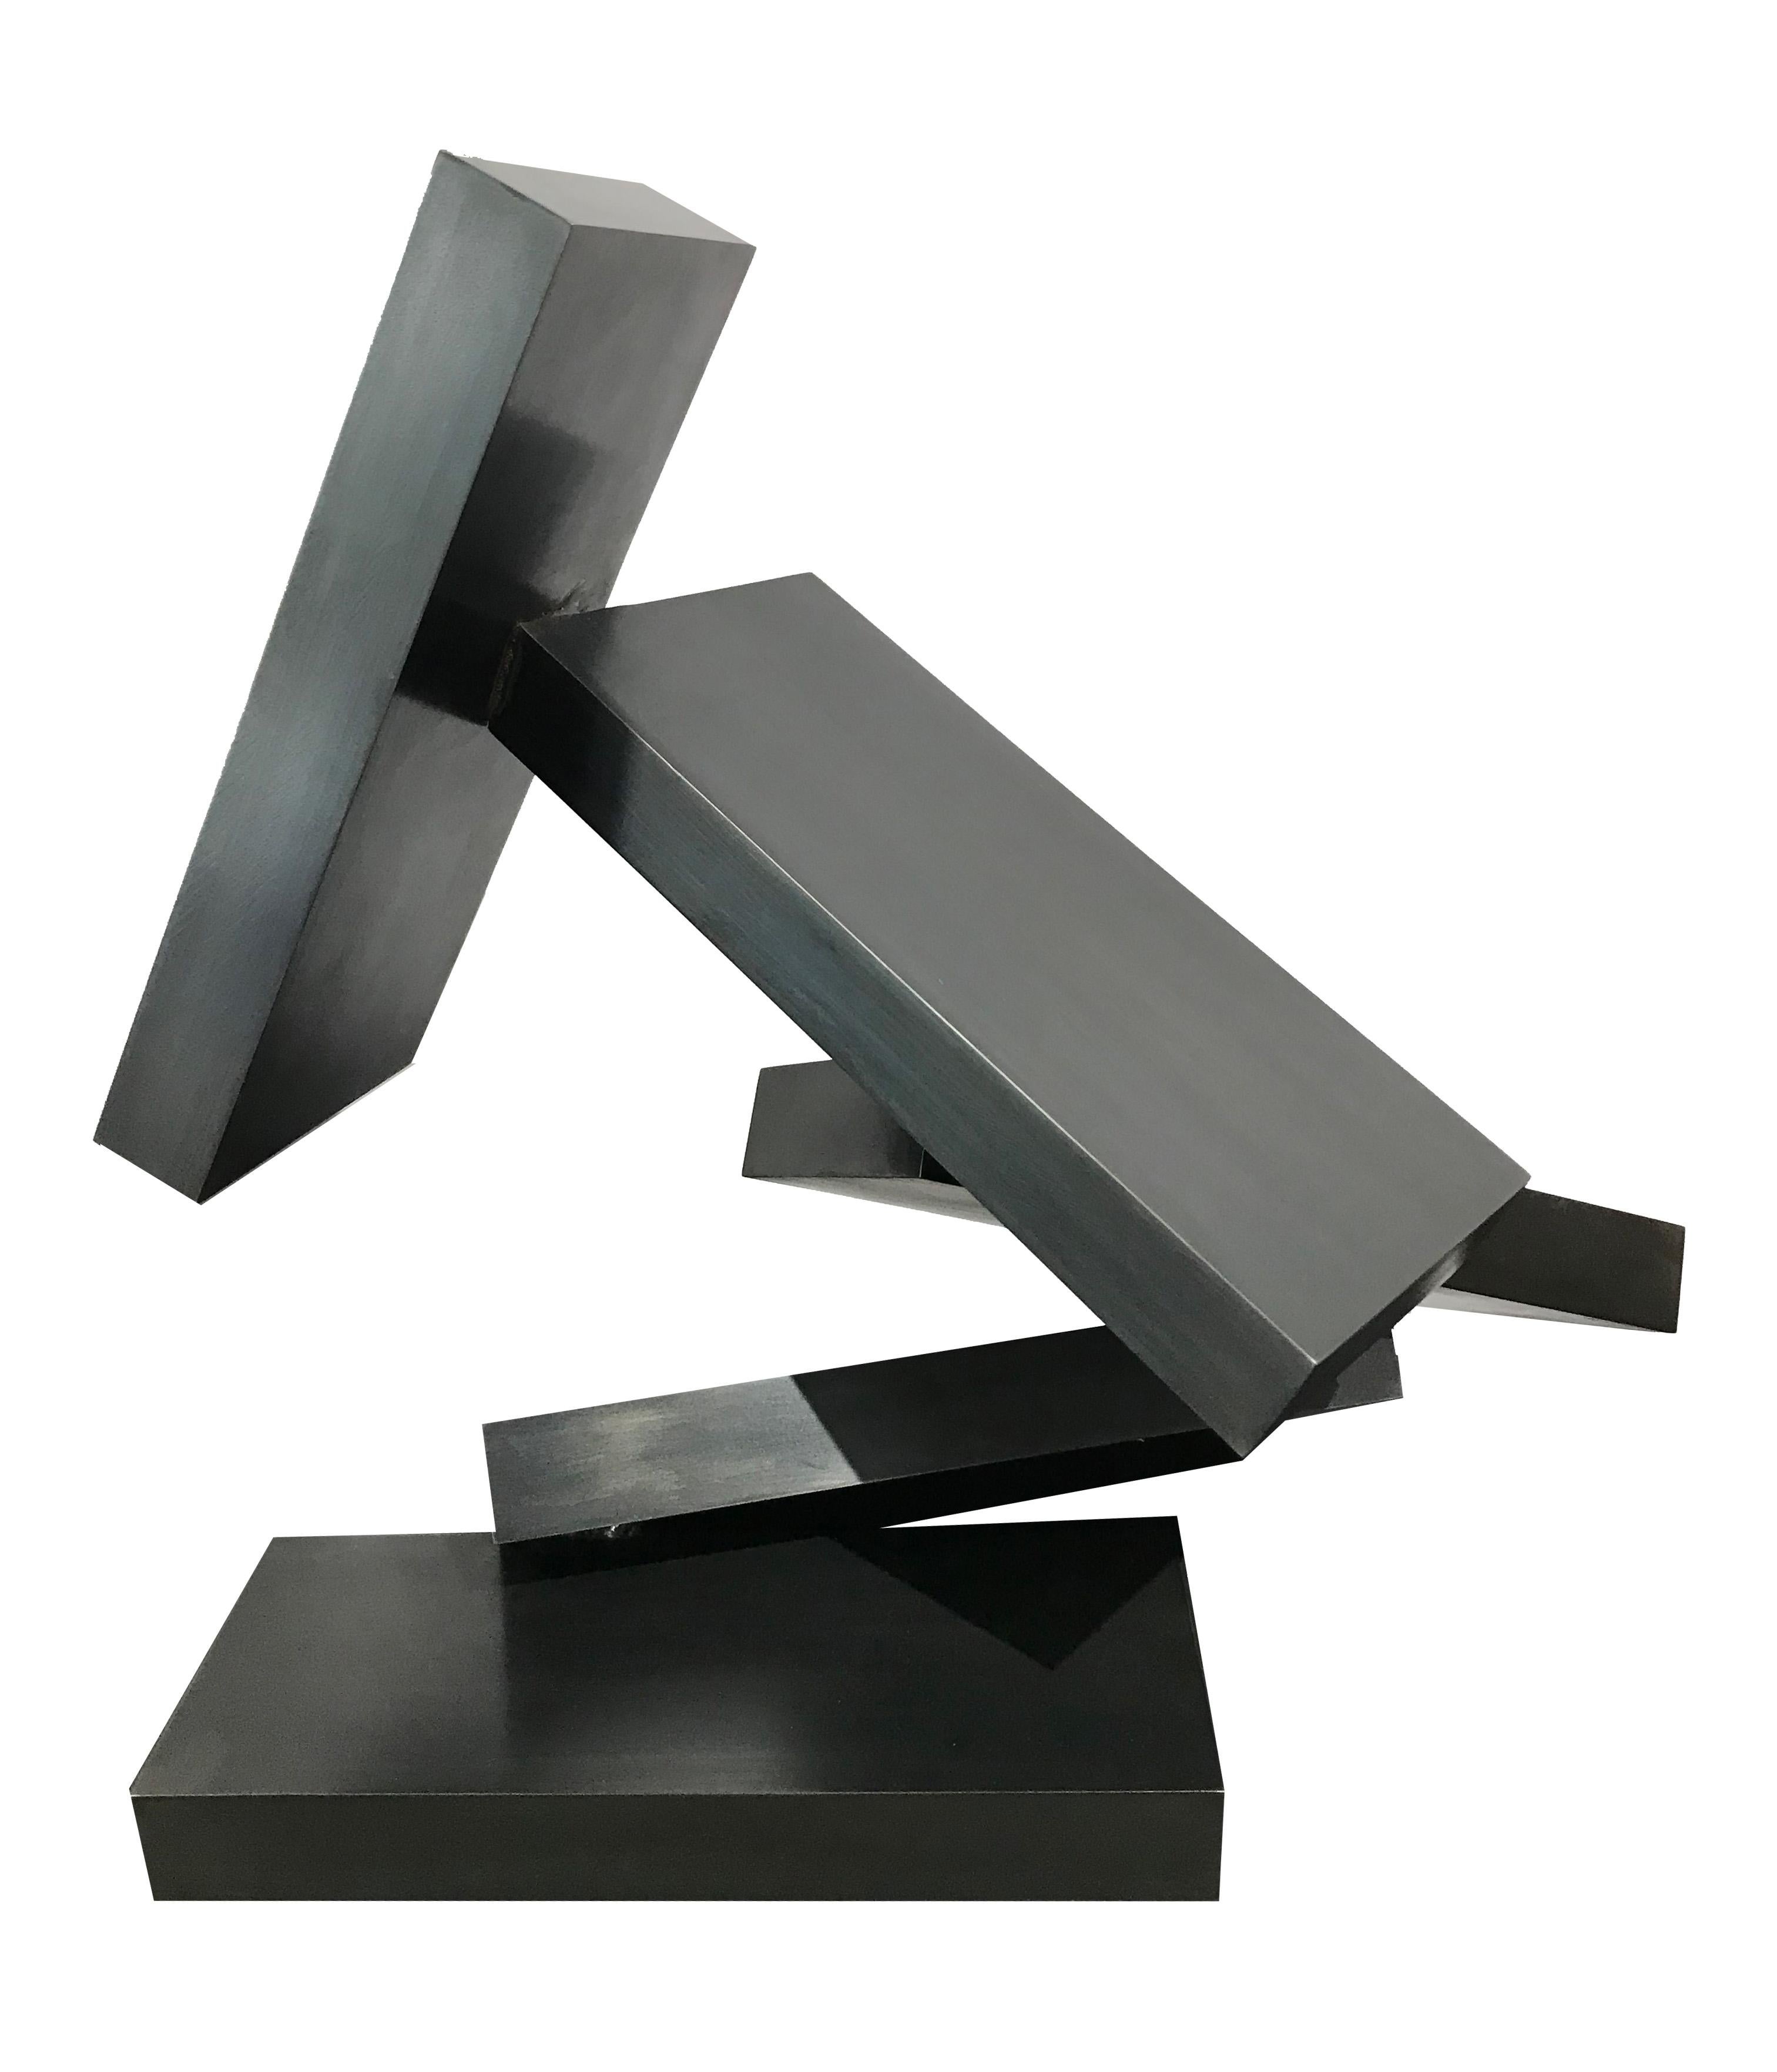 Etienne Viard Abstract Sculpture - 5 Plaques